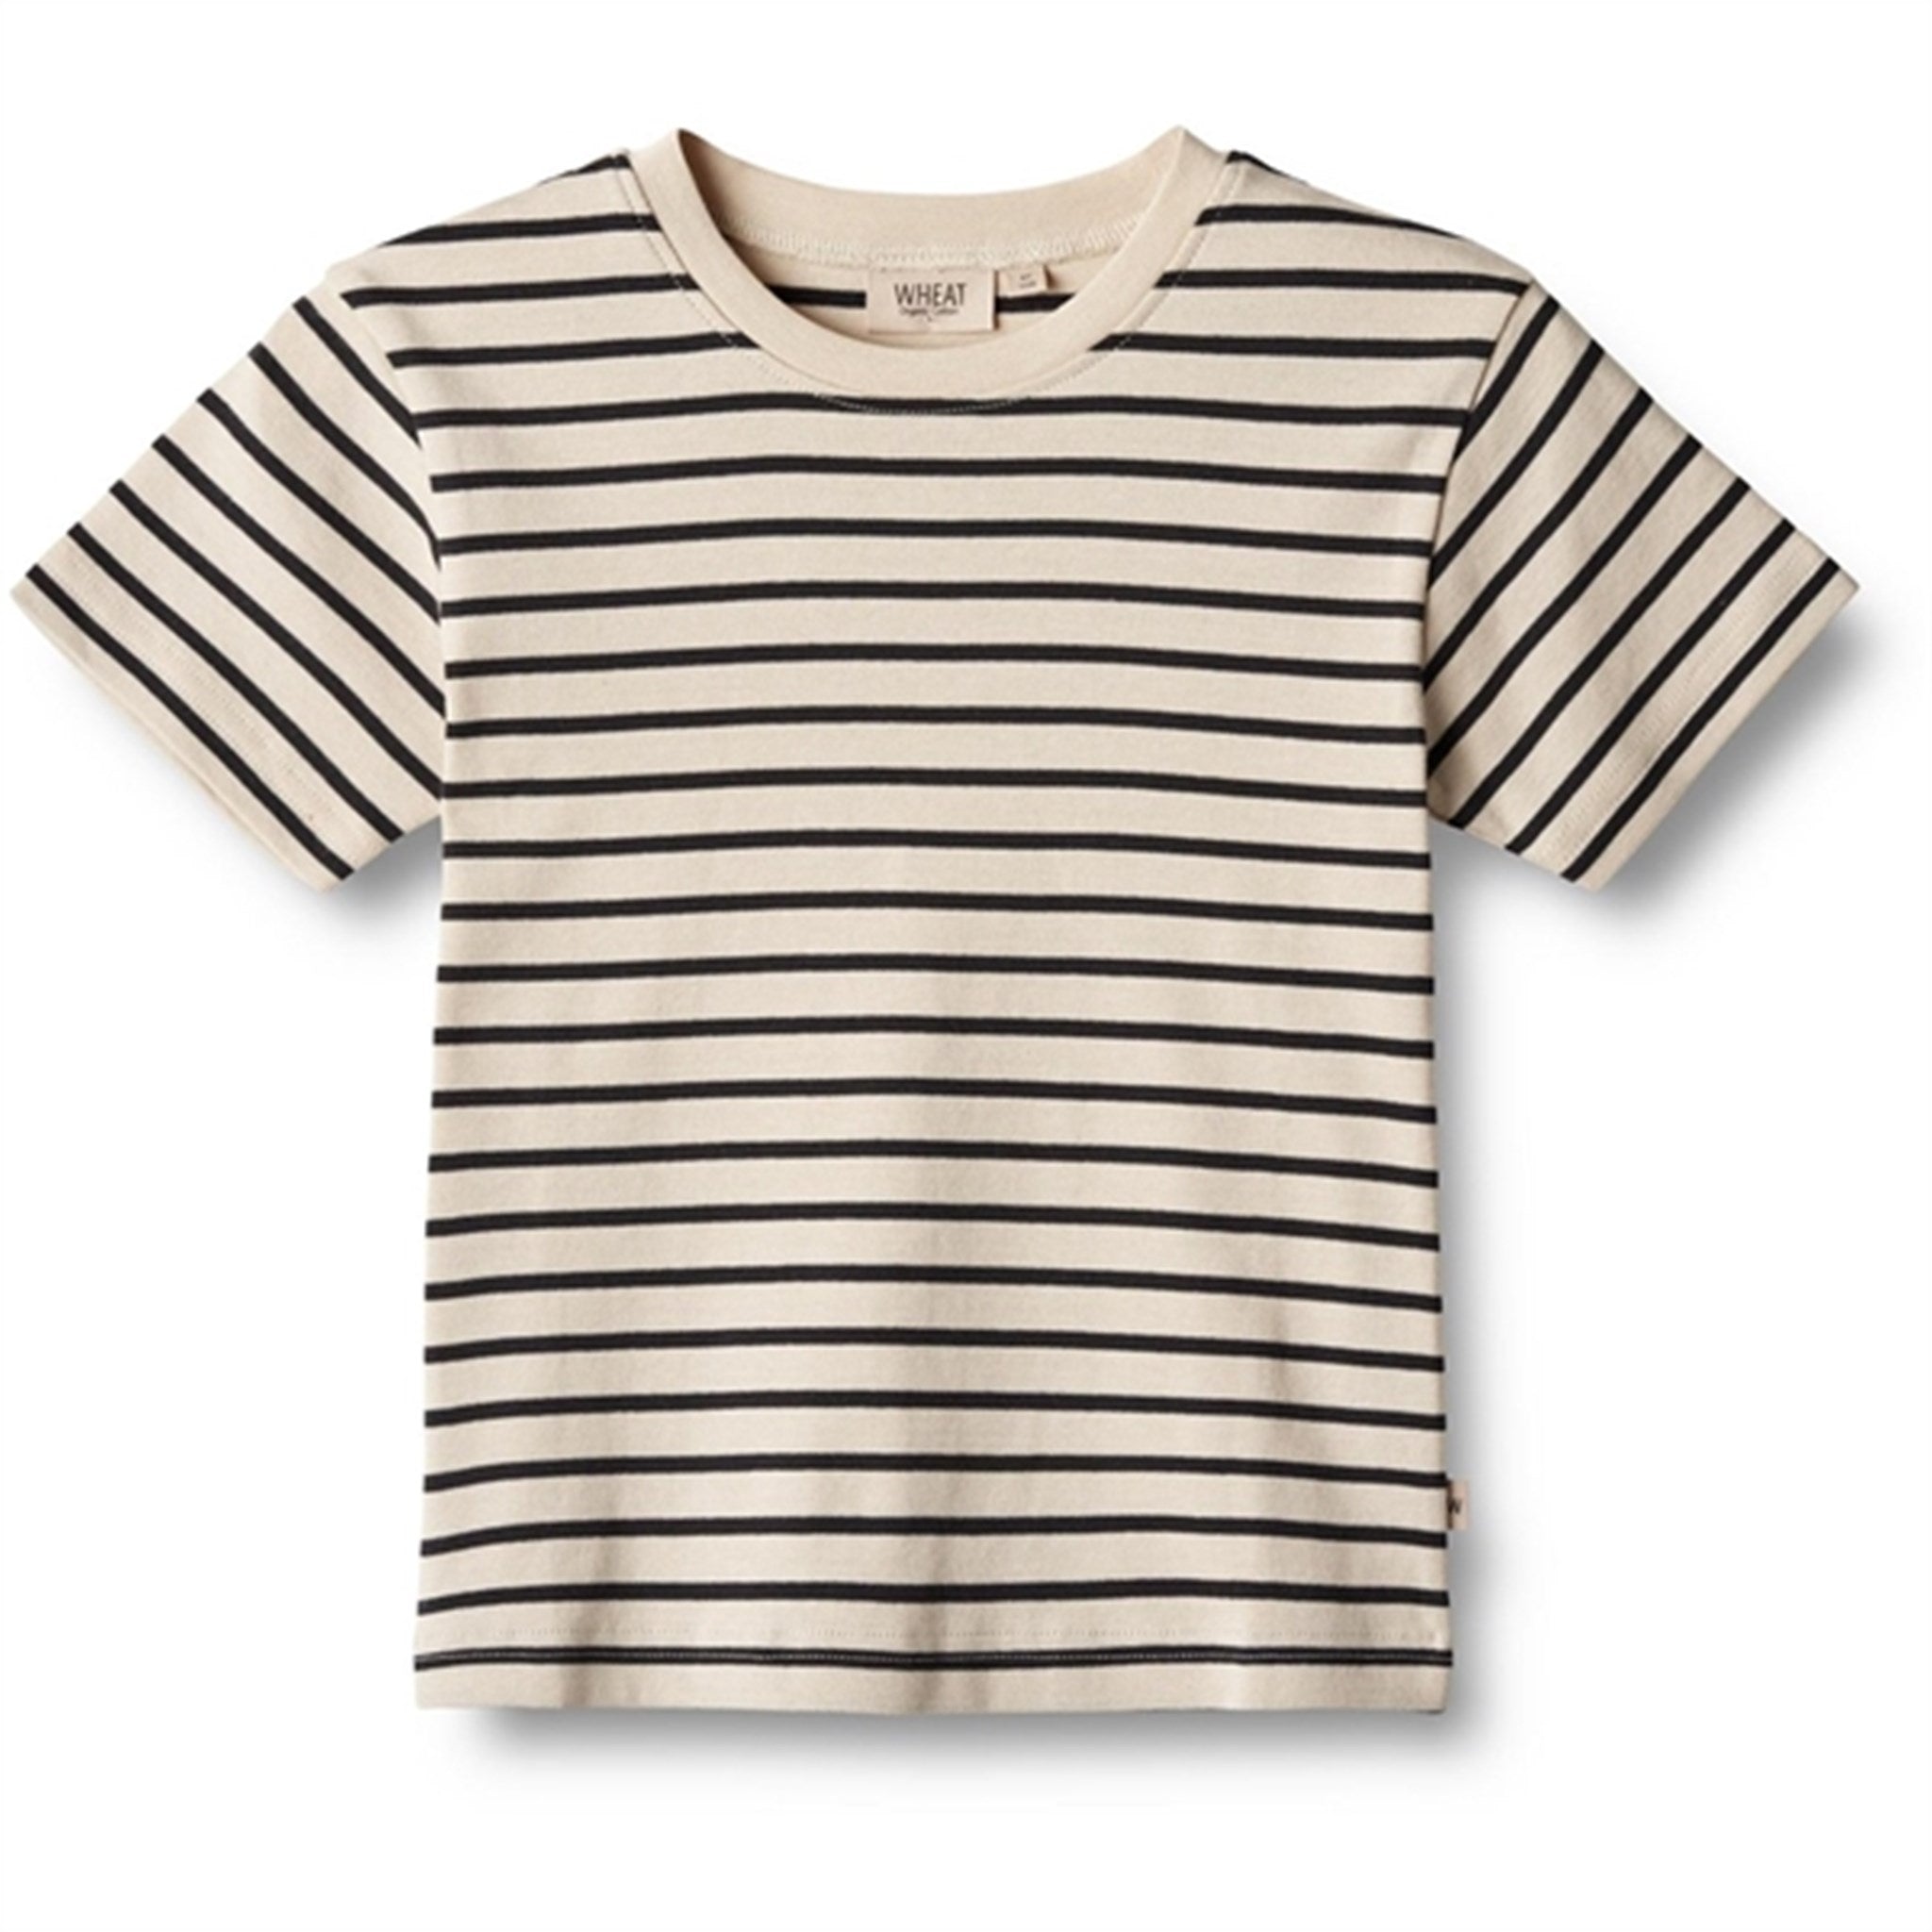 Wheat Navy Stripe T-shirt Fabian